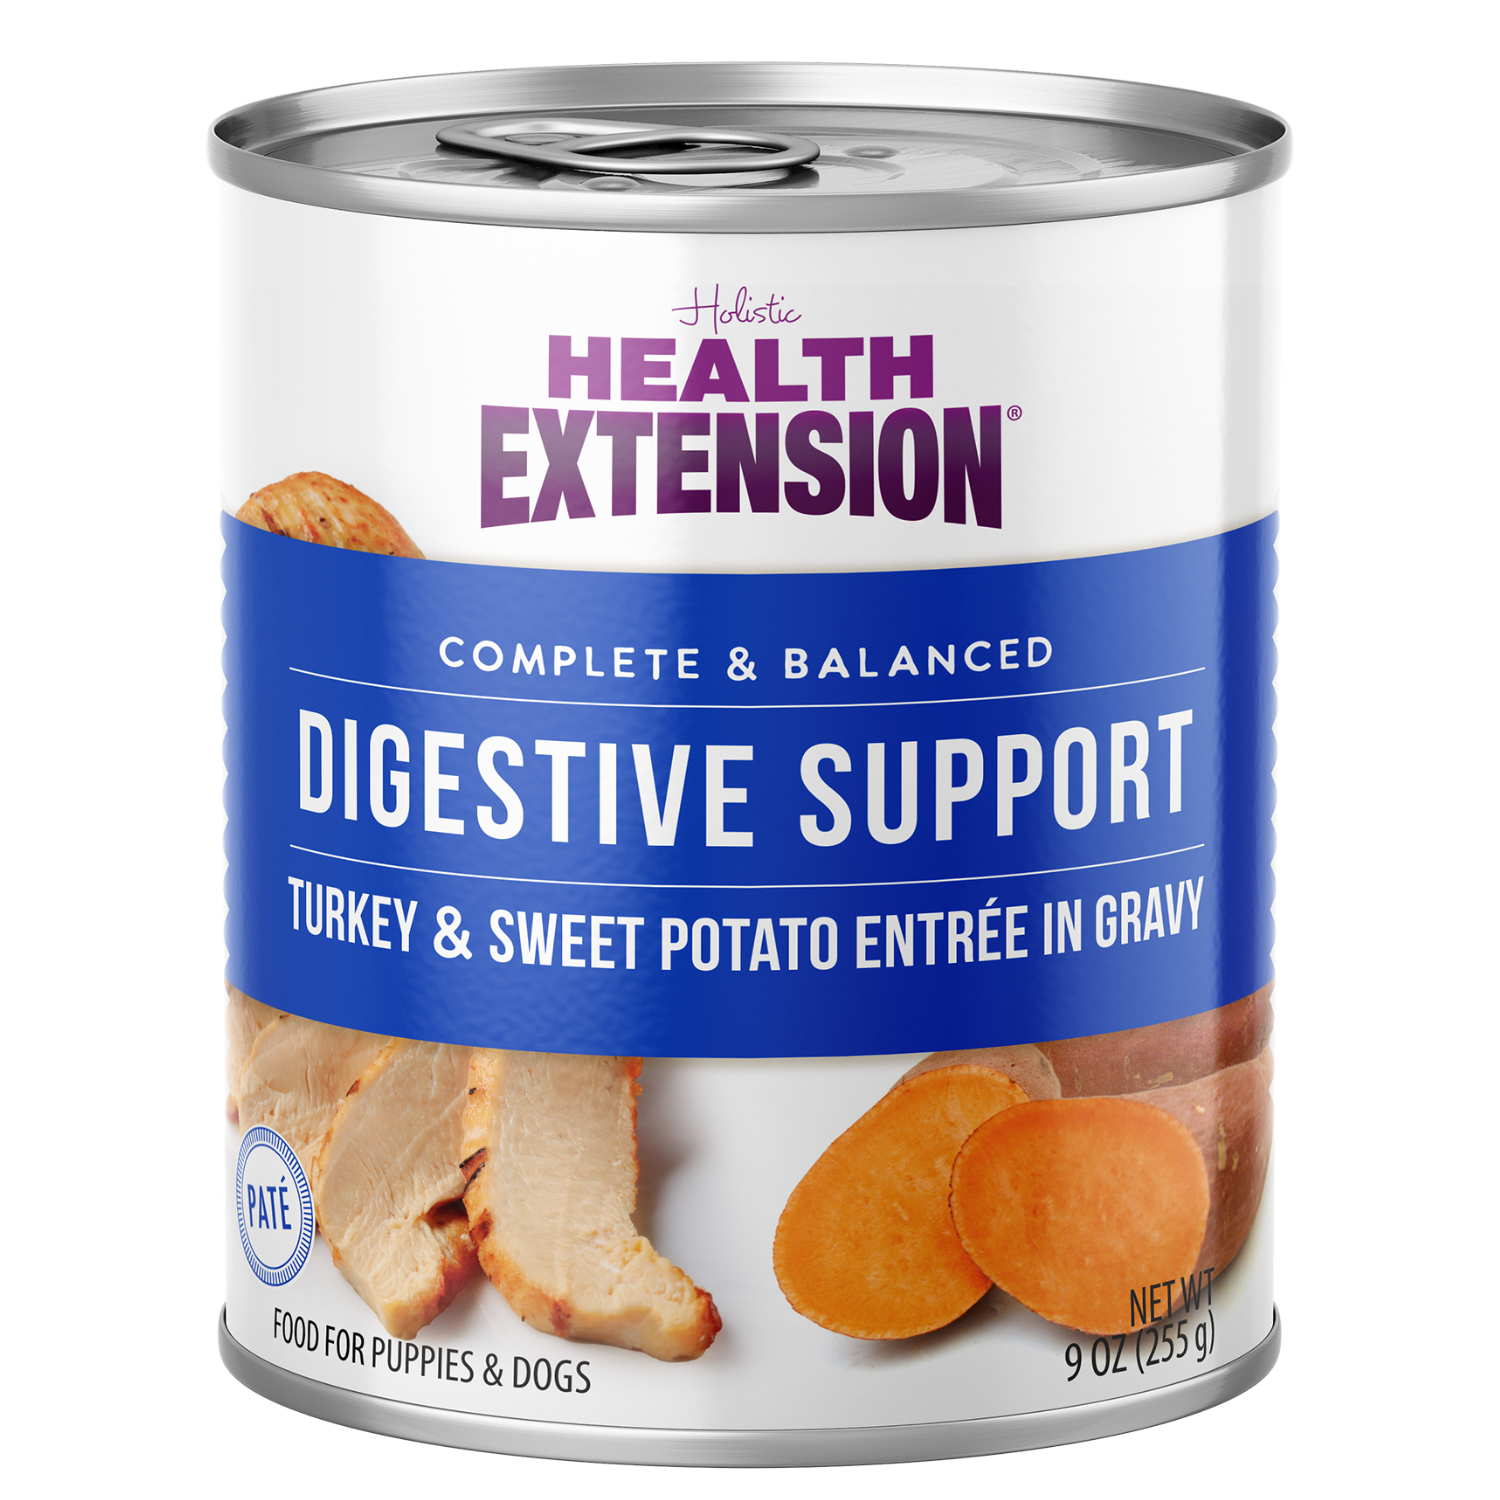 Digestive Support, Turkey & Sweet Potato Entrée in Gravy 9oz